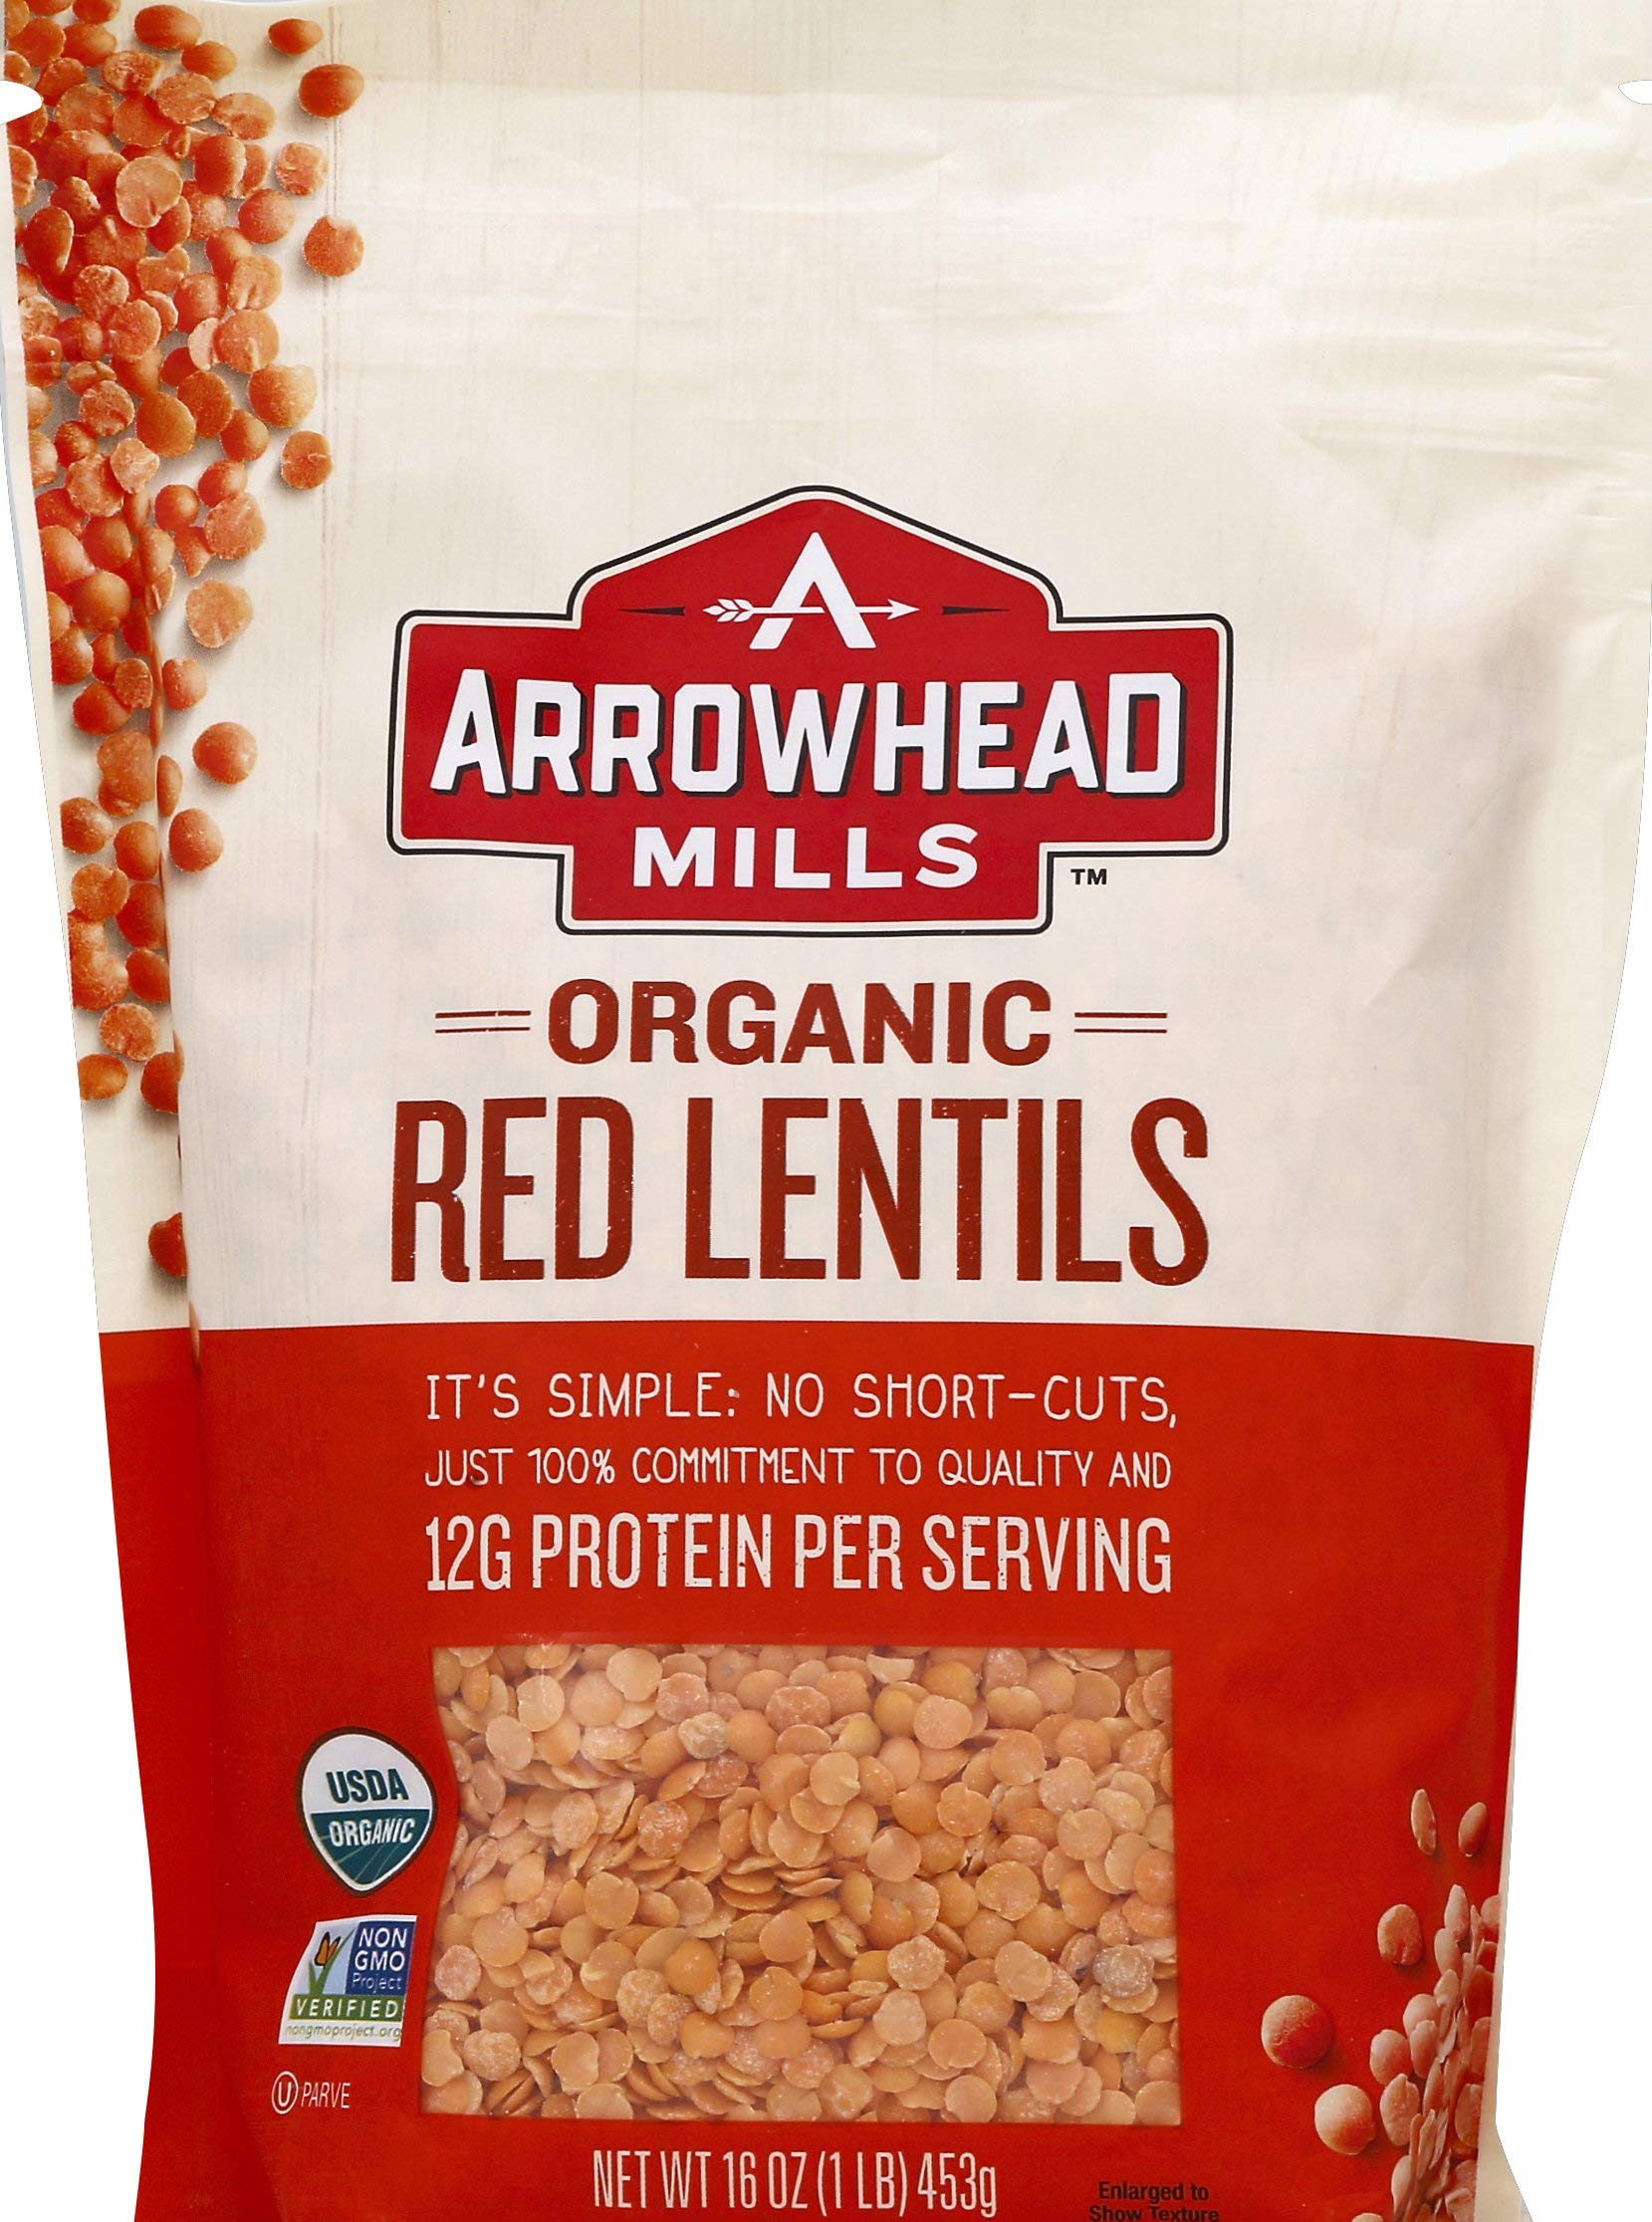 Arrowhead Mills Organic Flax Seeds, 1 Pound Bag